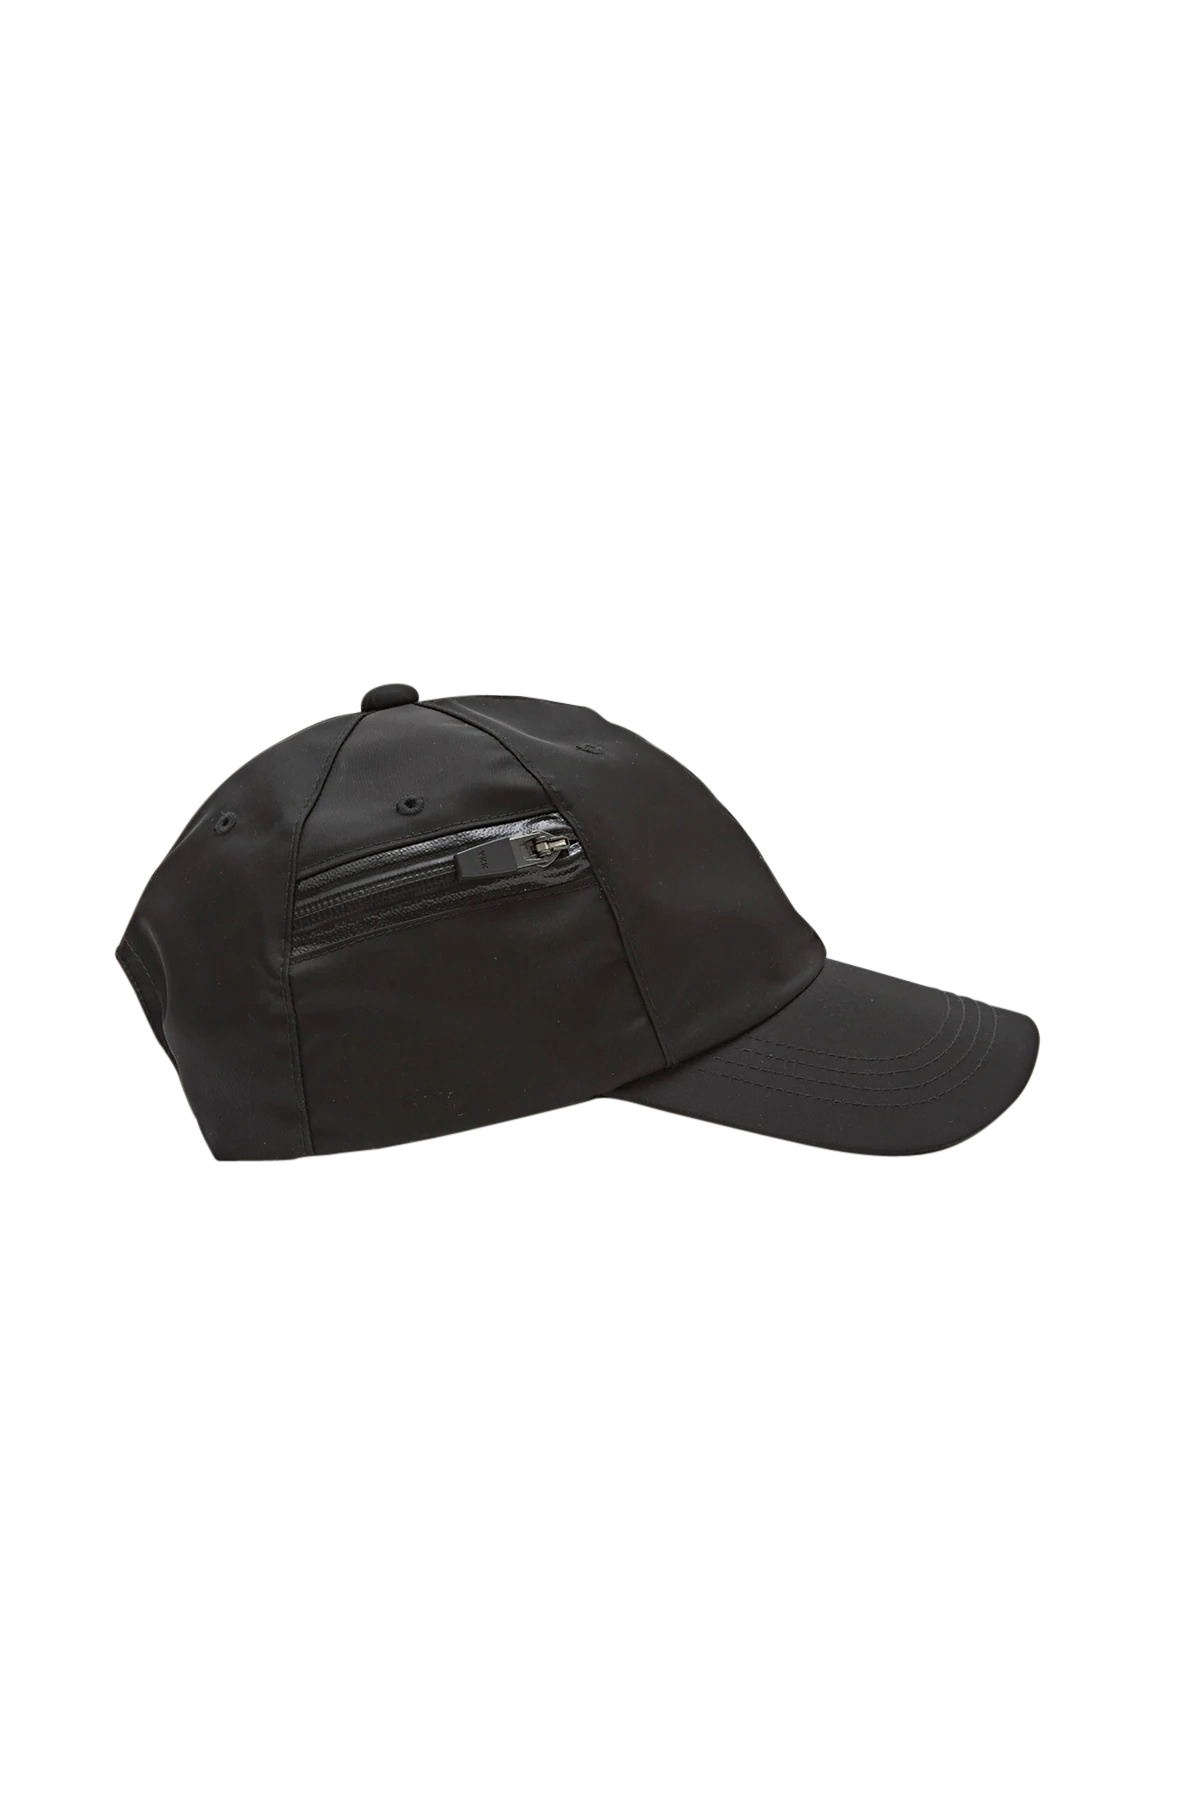 Bagjack Golf NIPO Zip Pocket Cap Black